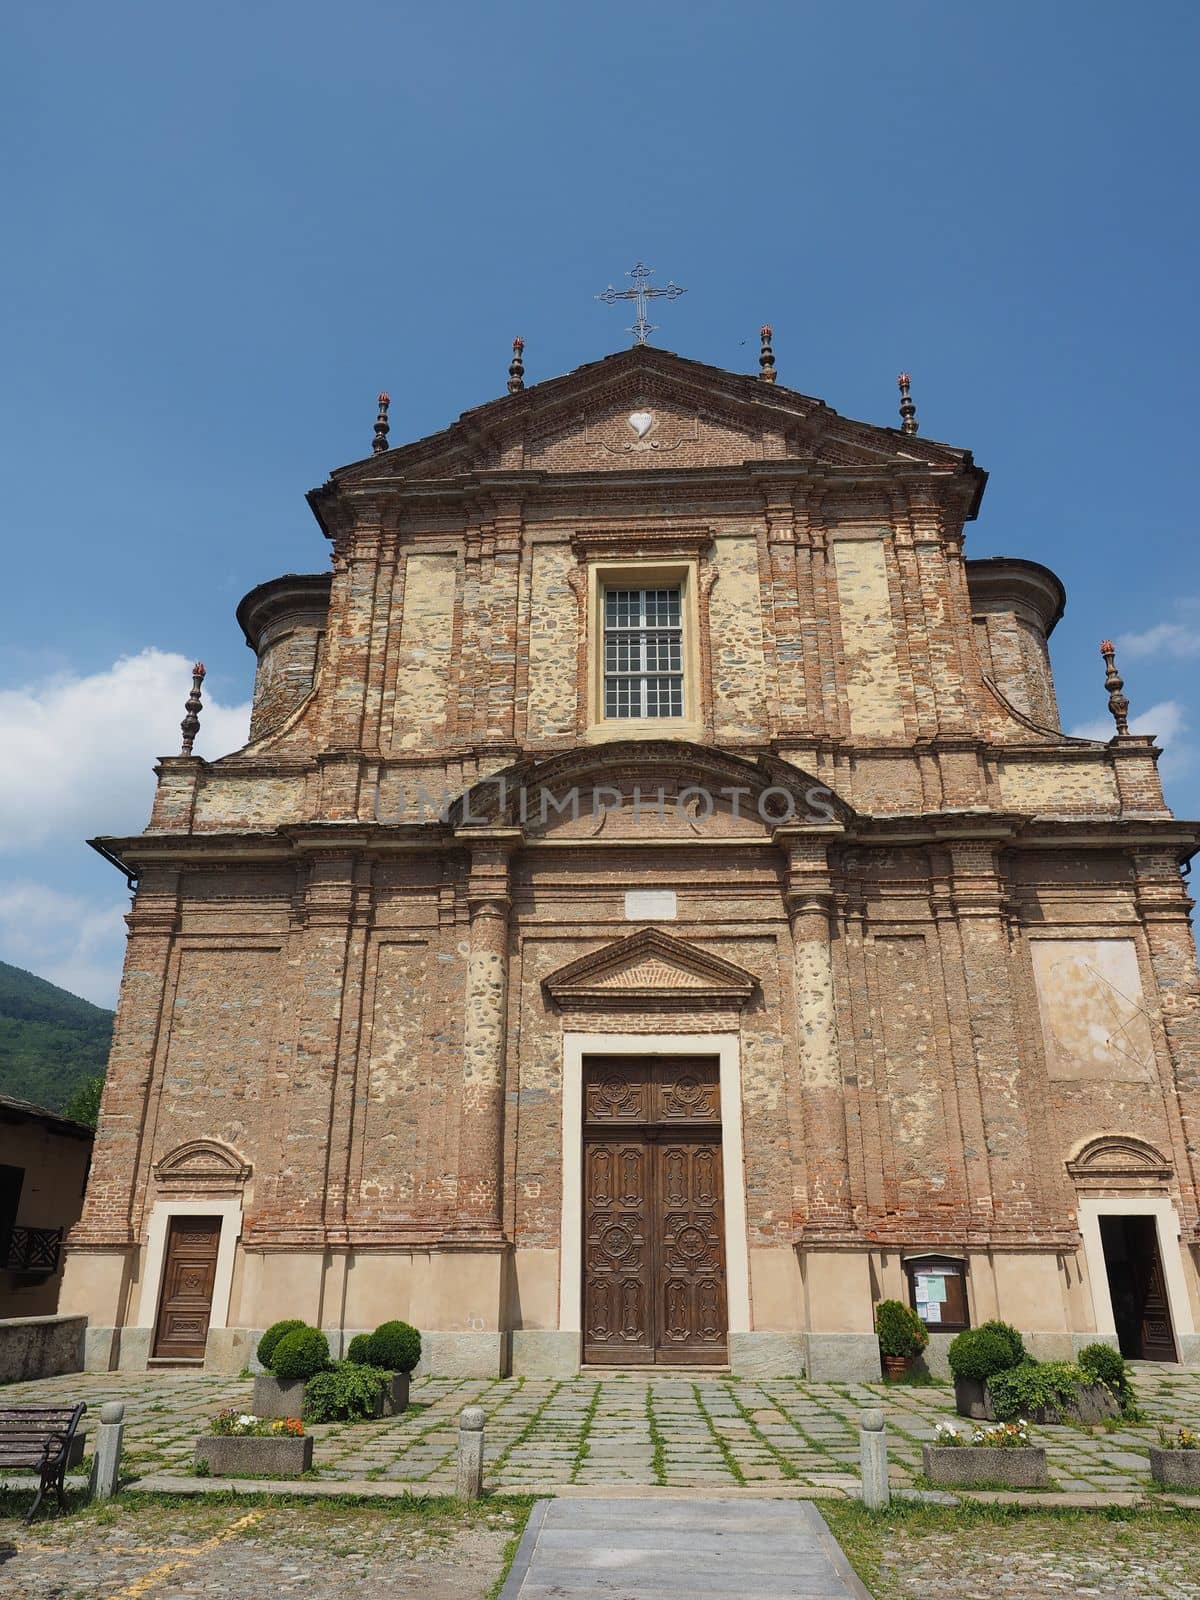 The church of San Genesio in Corio Canavese, Italy